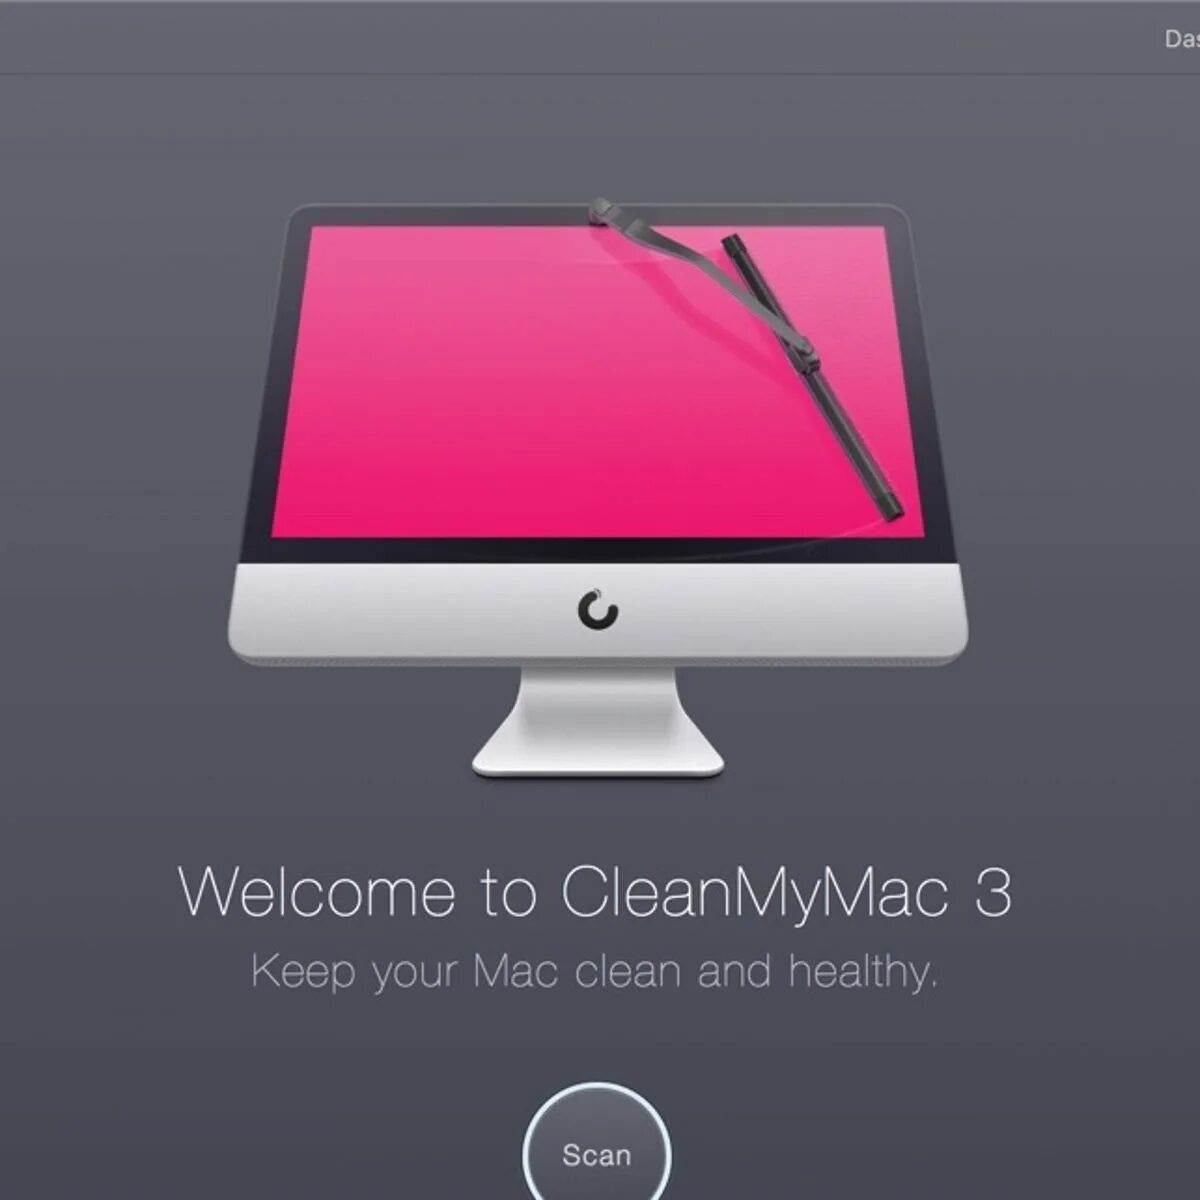 CLEANMYMAC. CLEANMYMAC картинка. Mac-Cleanup. Clean my Mac не открывается. Clean my mac x